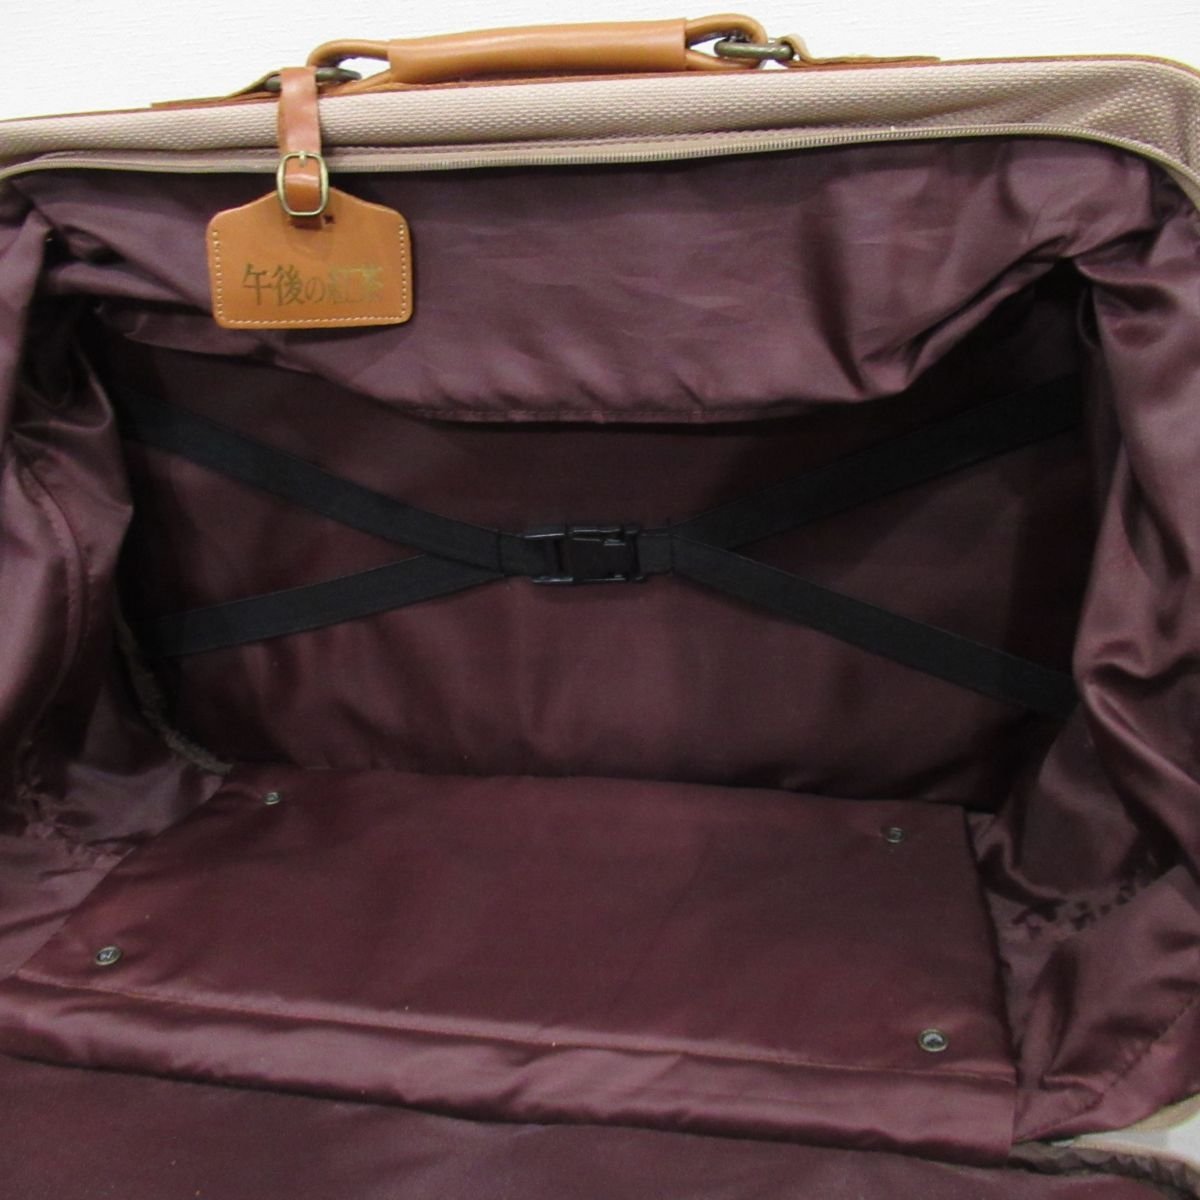  beautiful goods giraffe p.m.. black tea \'96 Koizumi trunk canvas × leather carry bag Carry case Boston bag 2way travel bag beige 